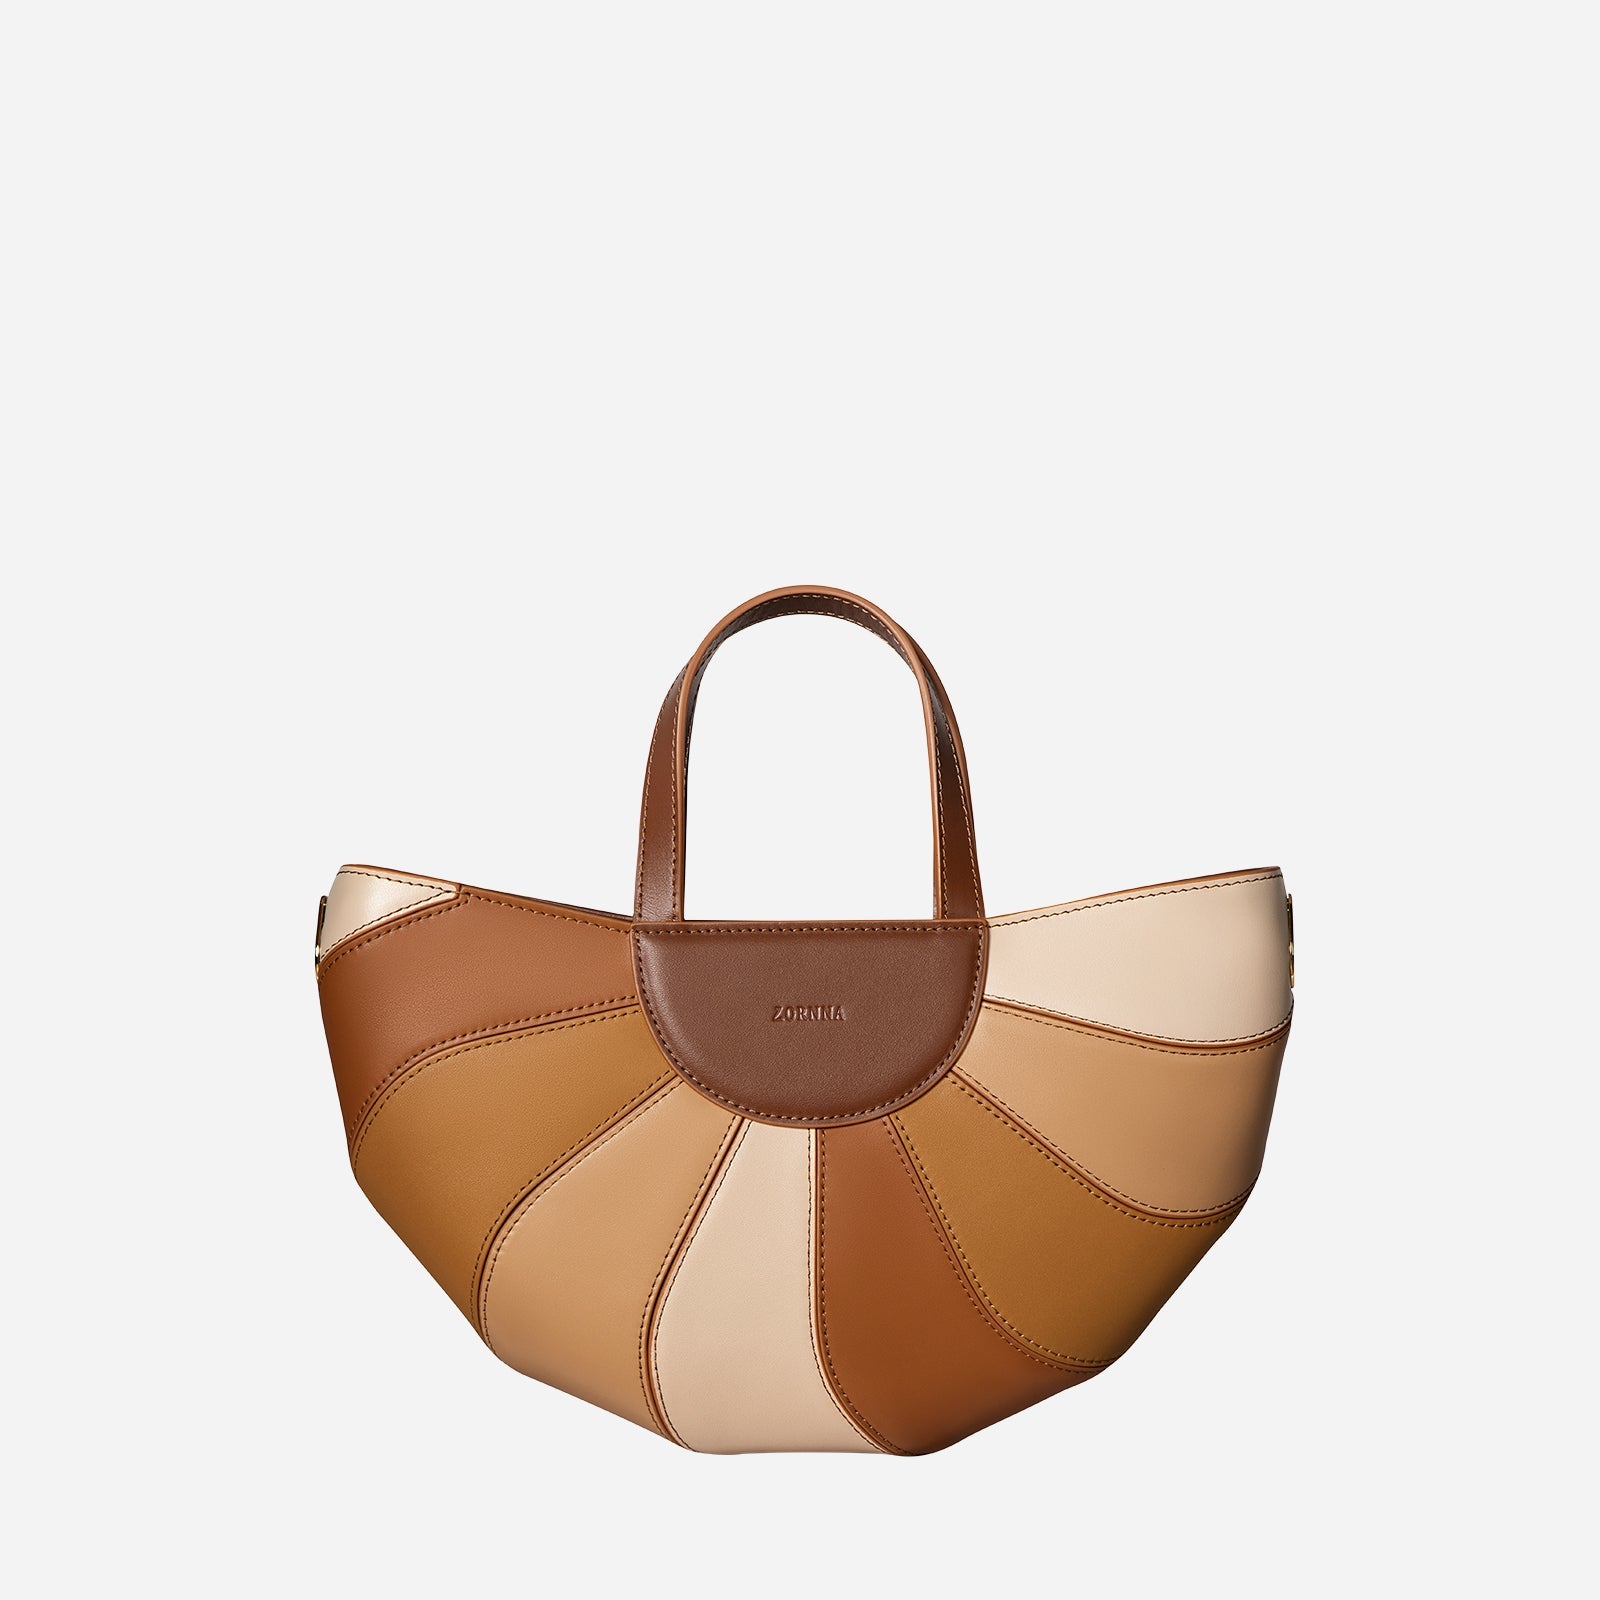 Small handmade leather purse